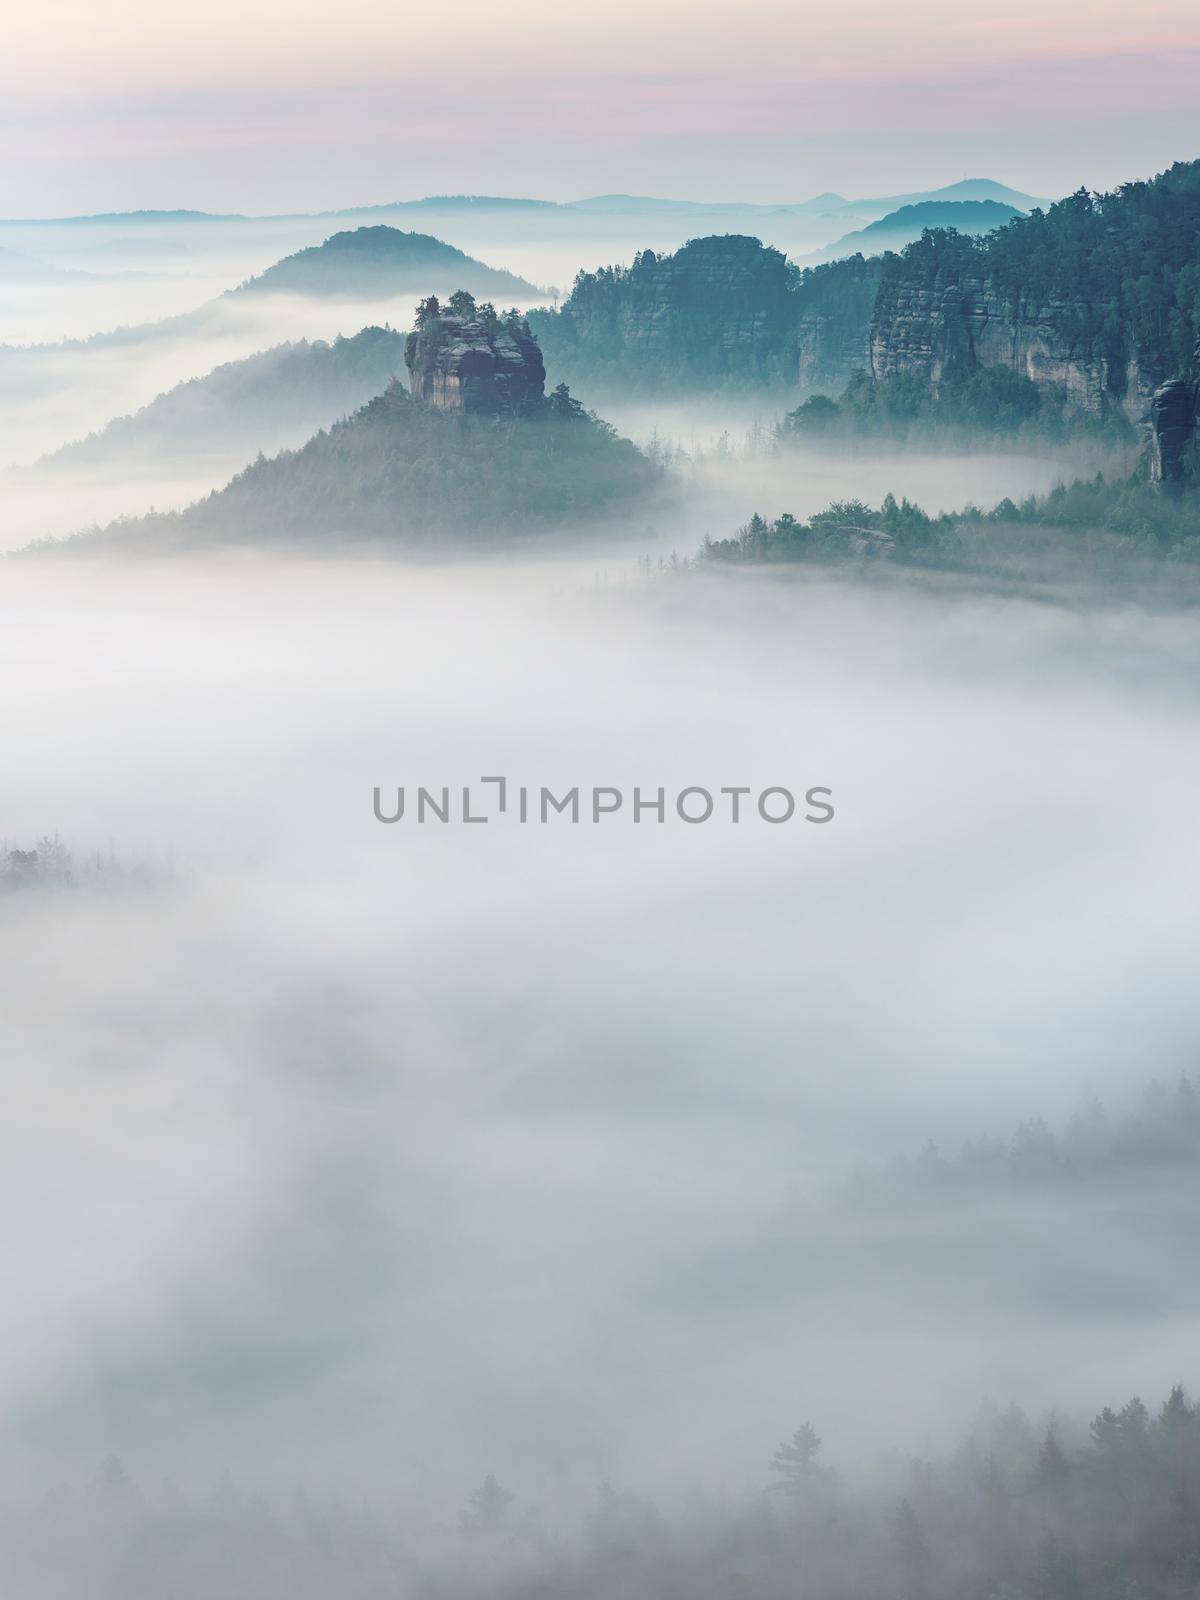 Winterstein, also called Hinteres Raubschloss or Raubstein sticking out of mist by rdonar2